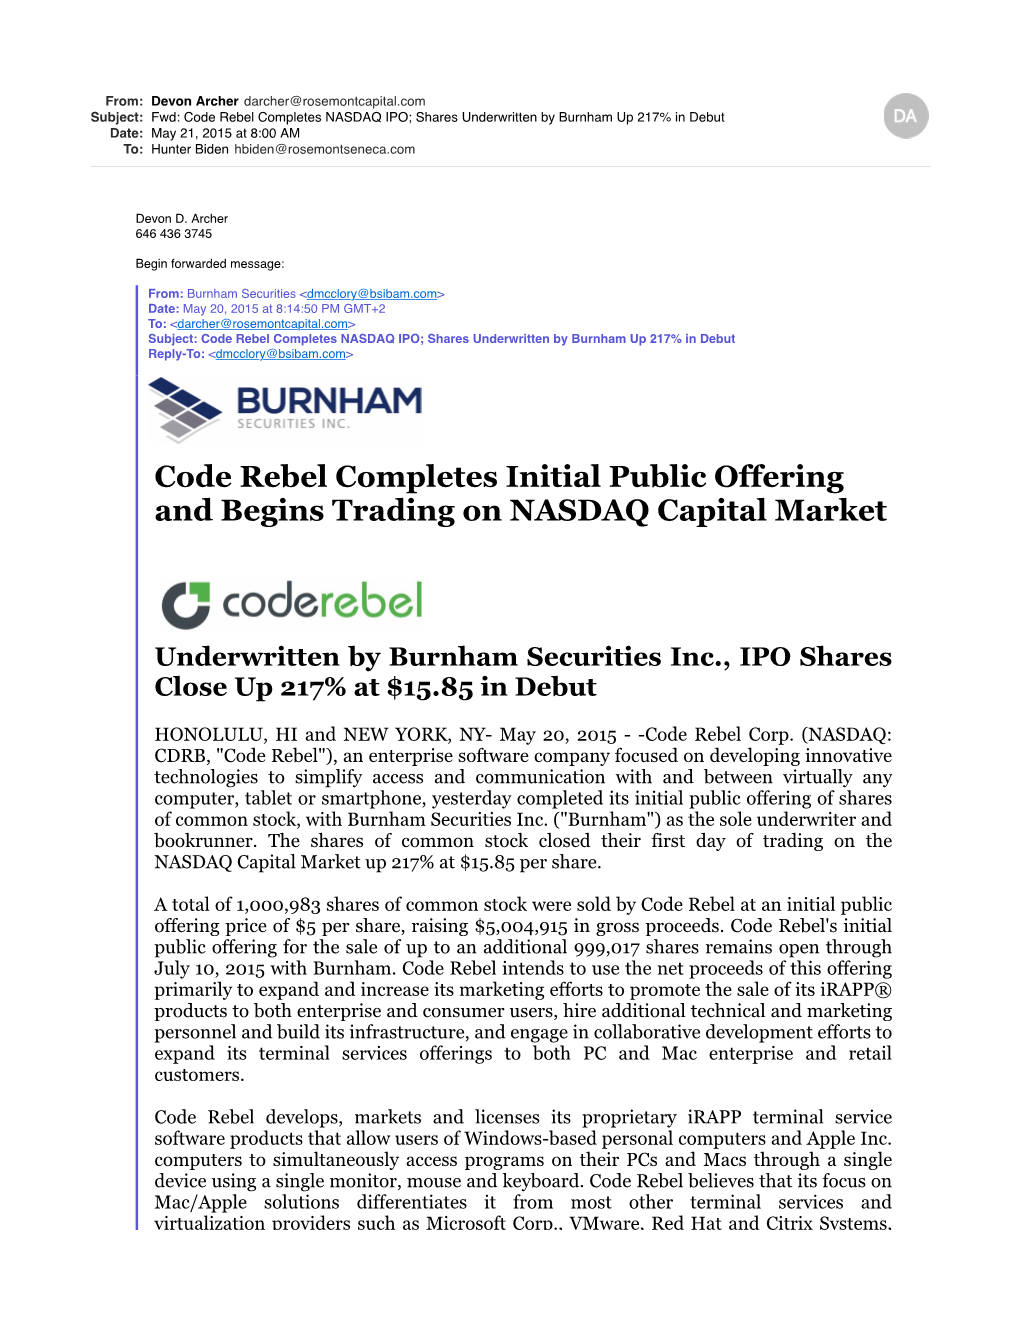 Fwd Code Rebel Completes NASDAQ IPO Shares Underwritten By